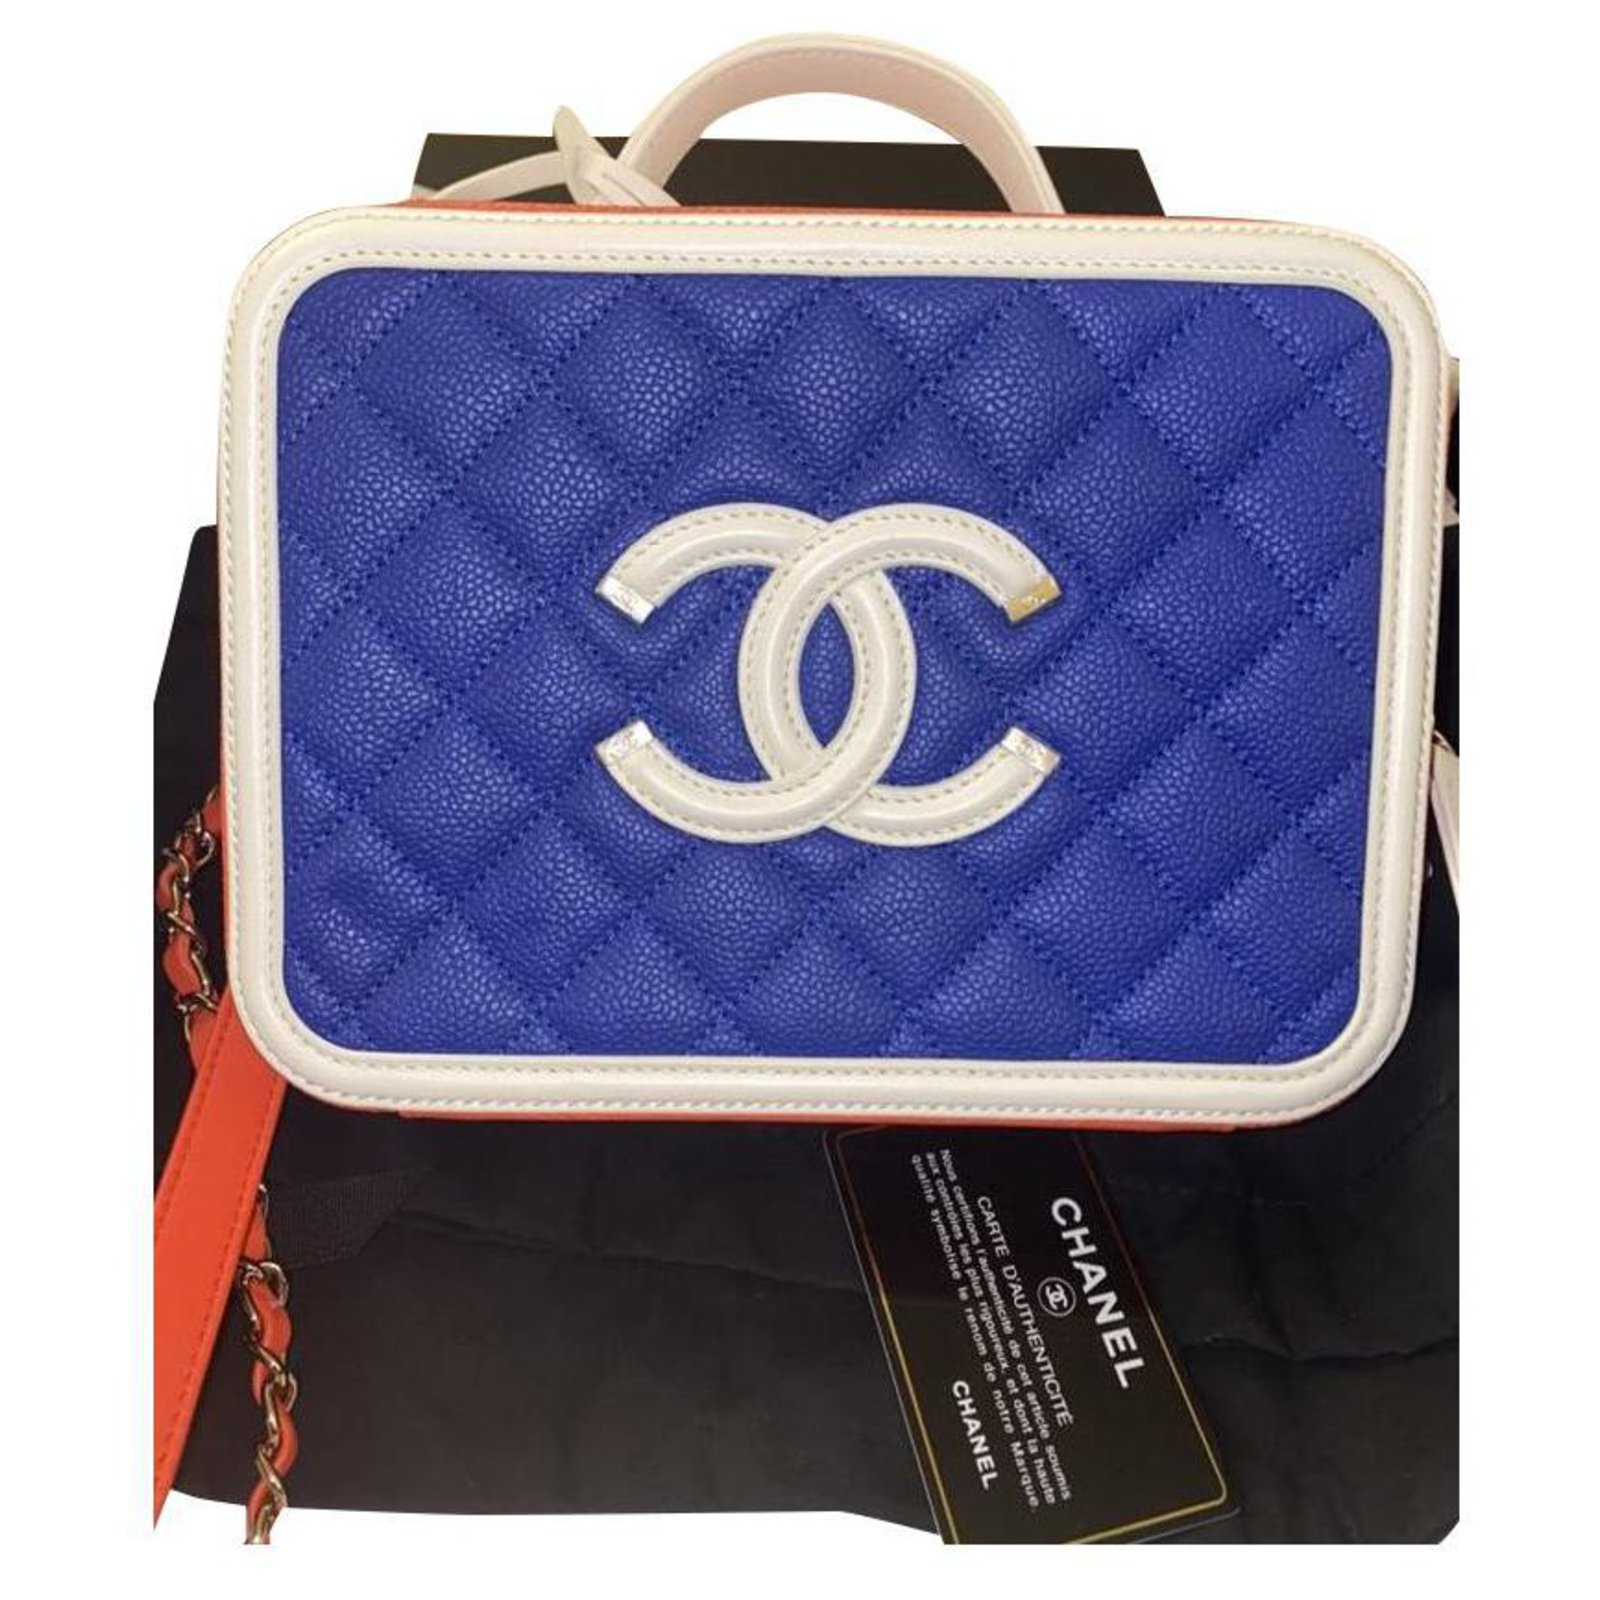 Red Chanel CC Caviar Vanity Bag